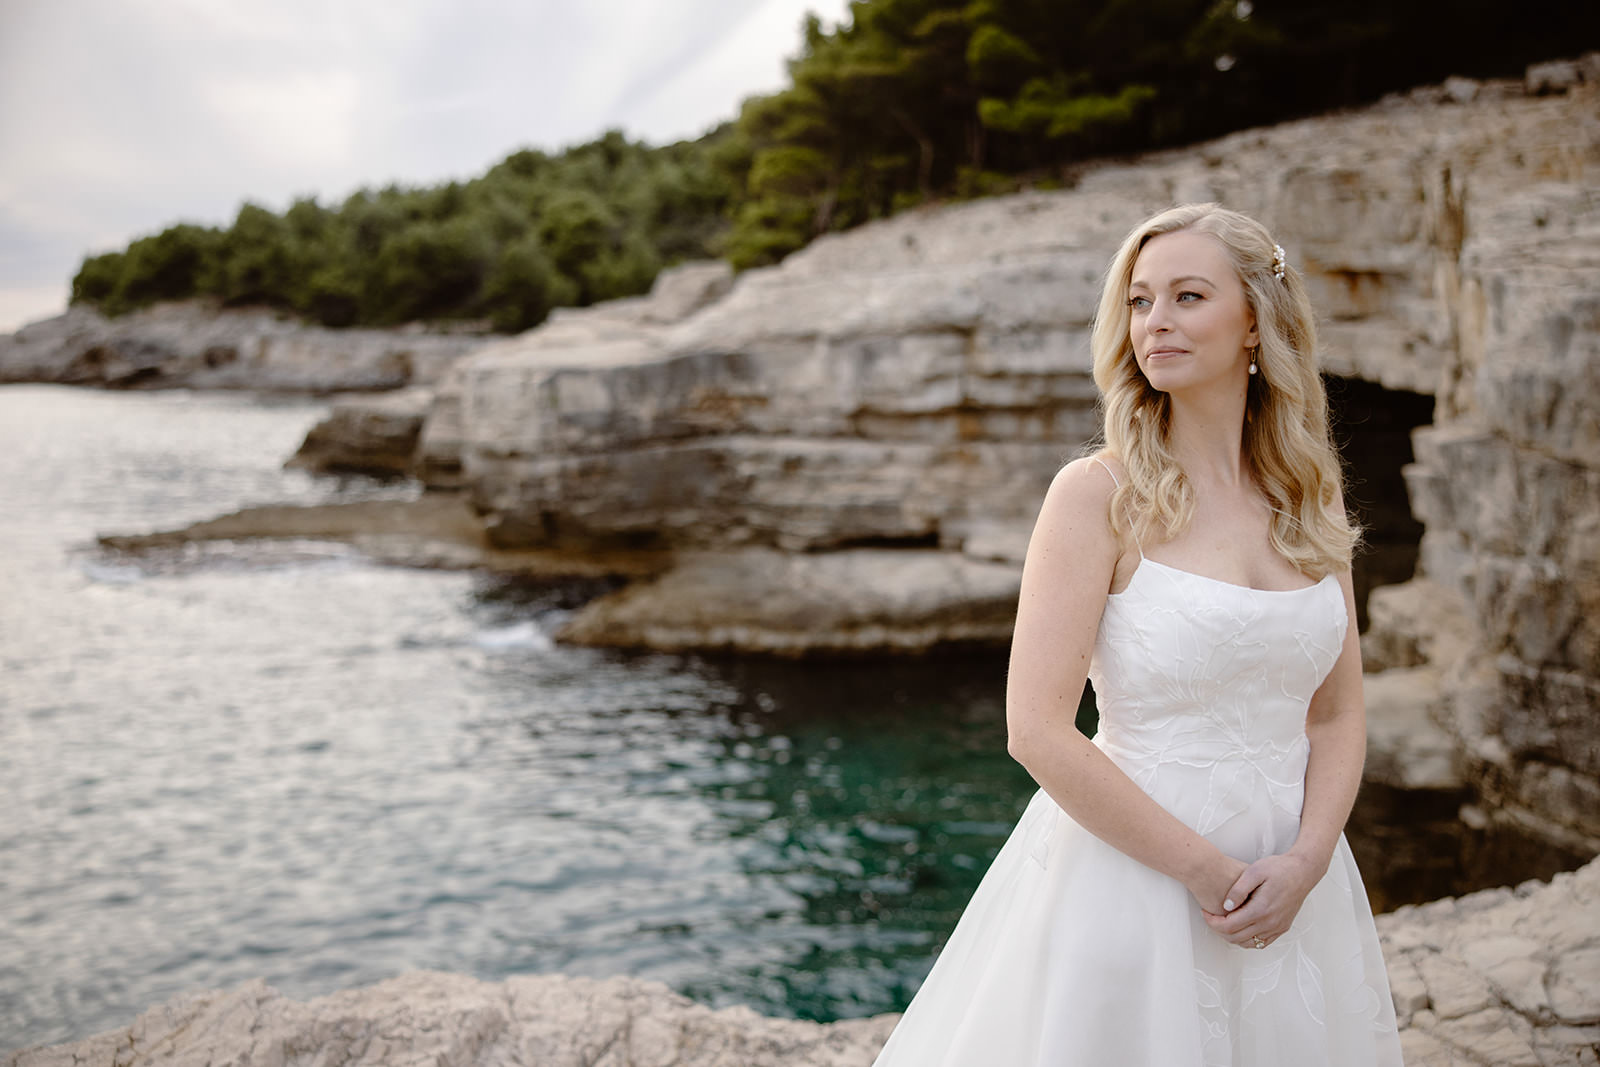 Istria Pula Rovinj Meneghetti wedding 1L4A9357 | Croatia Elopement Photographer and Videographer